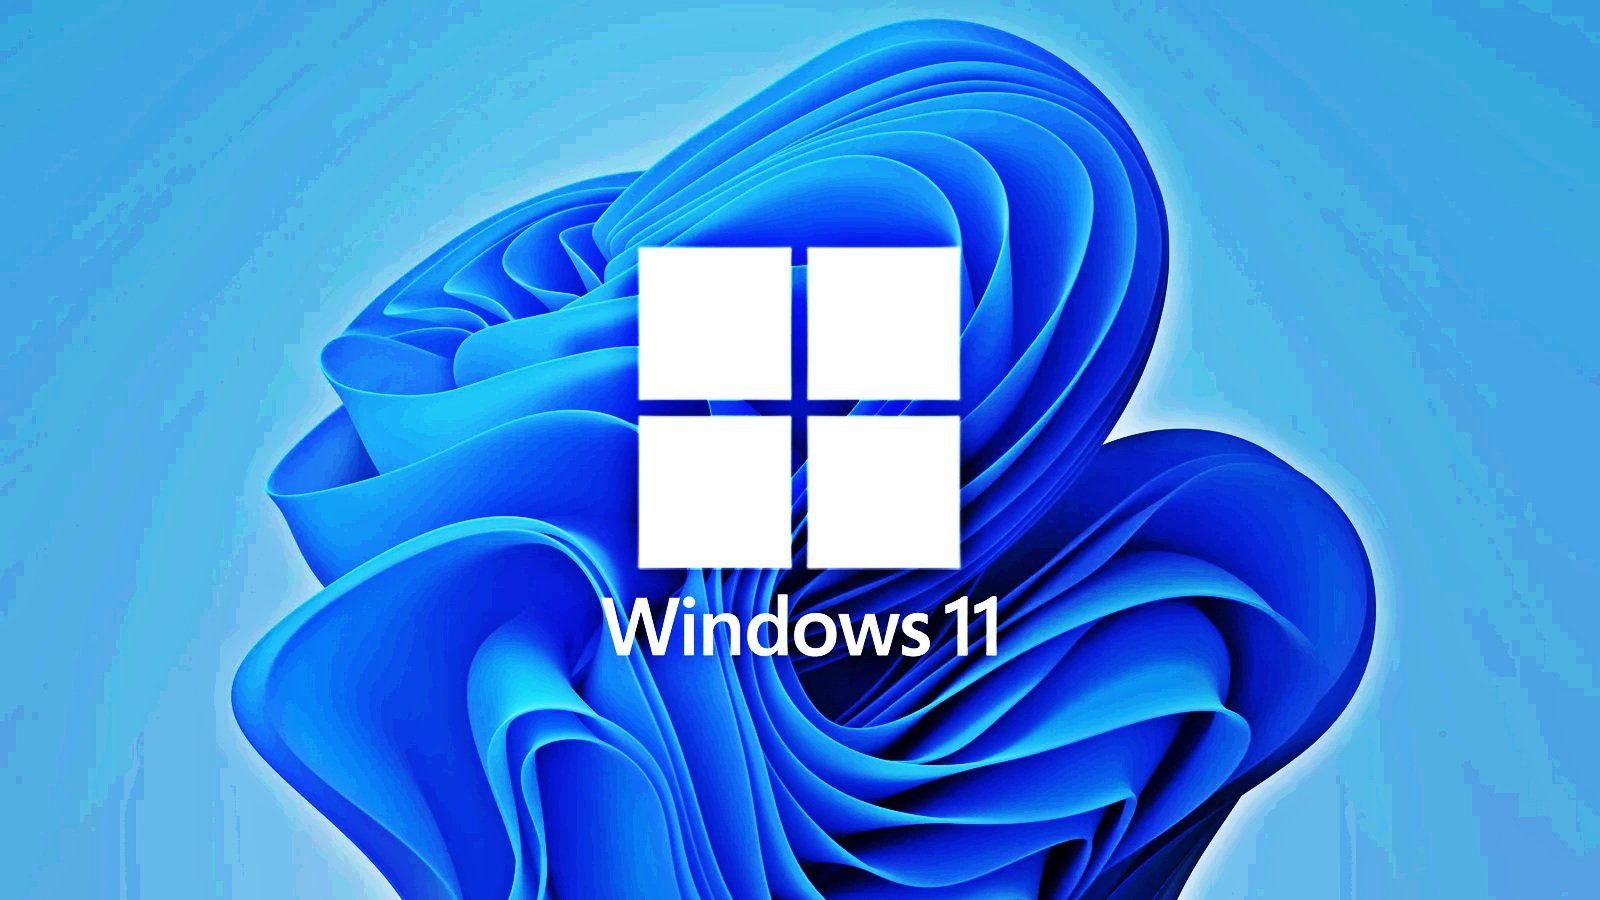 Microsoft investigates slow Windows VPN speeds after May updates – Source: www.bleepingcomputer.com